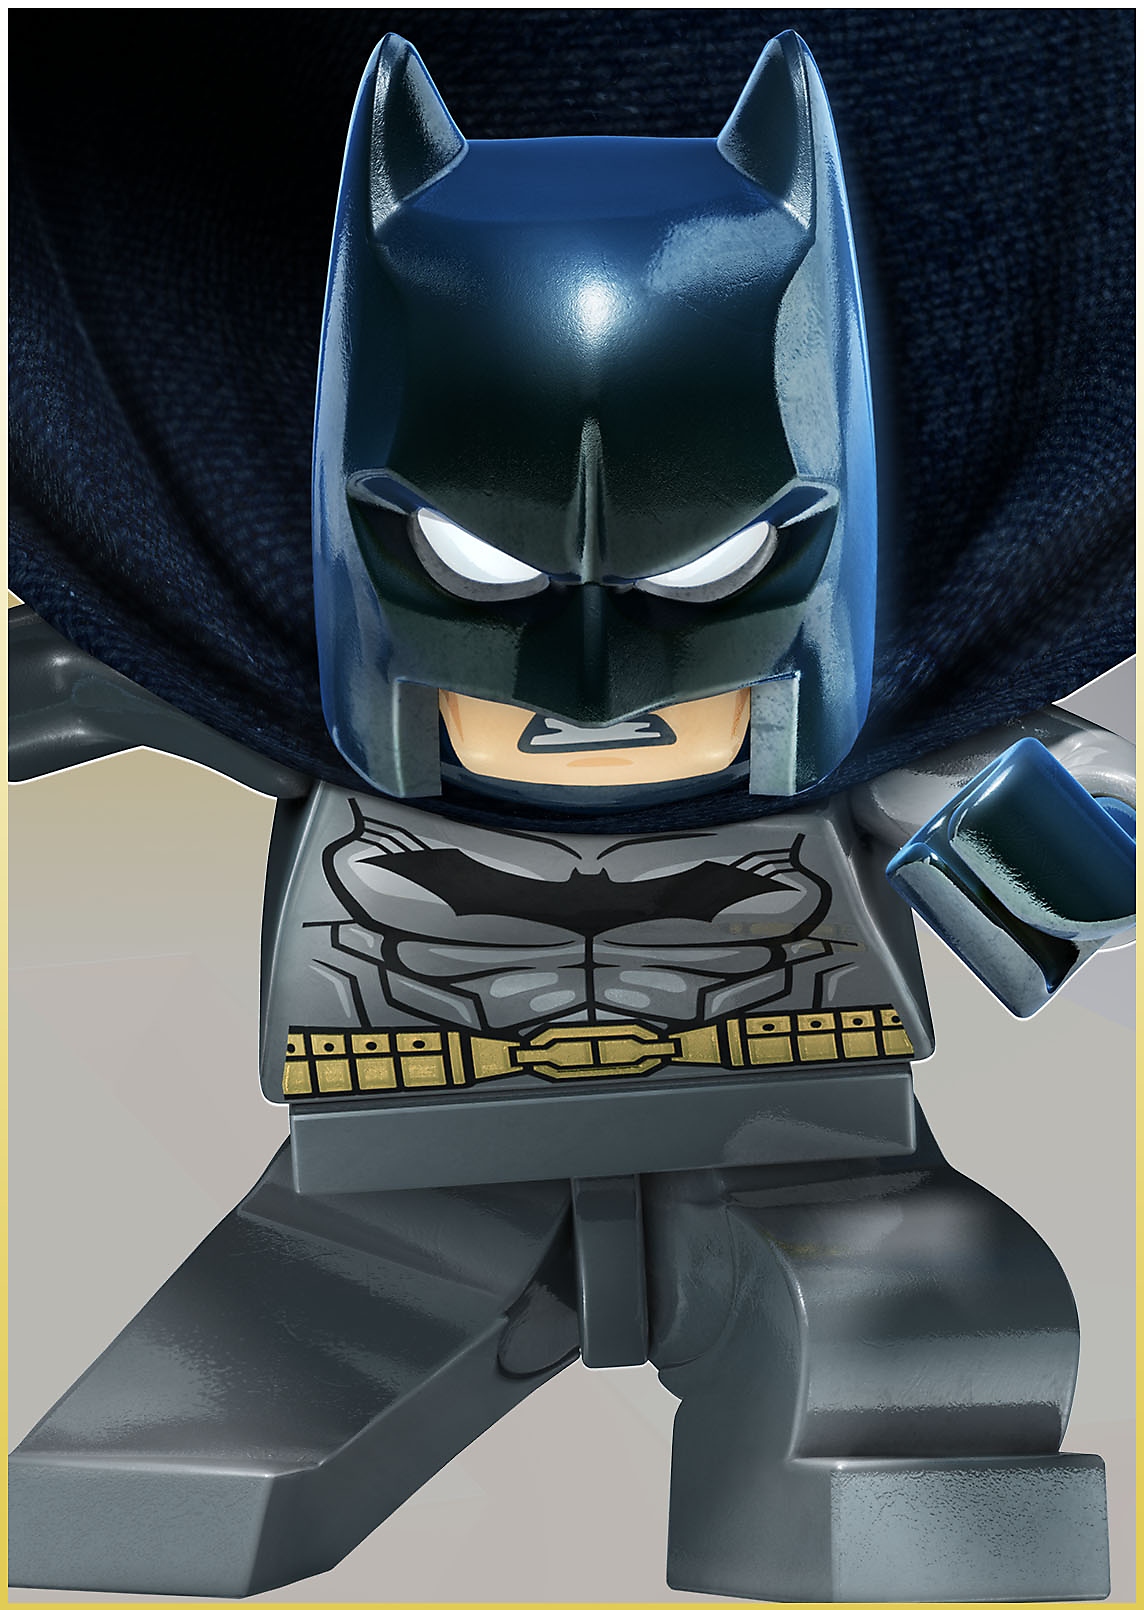 Arrivo sensazionale di Lego Batman